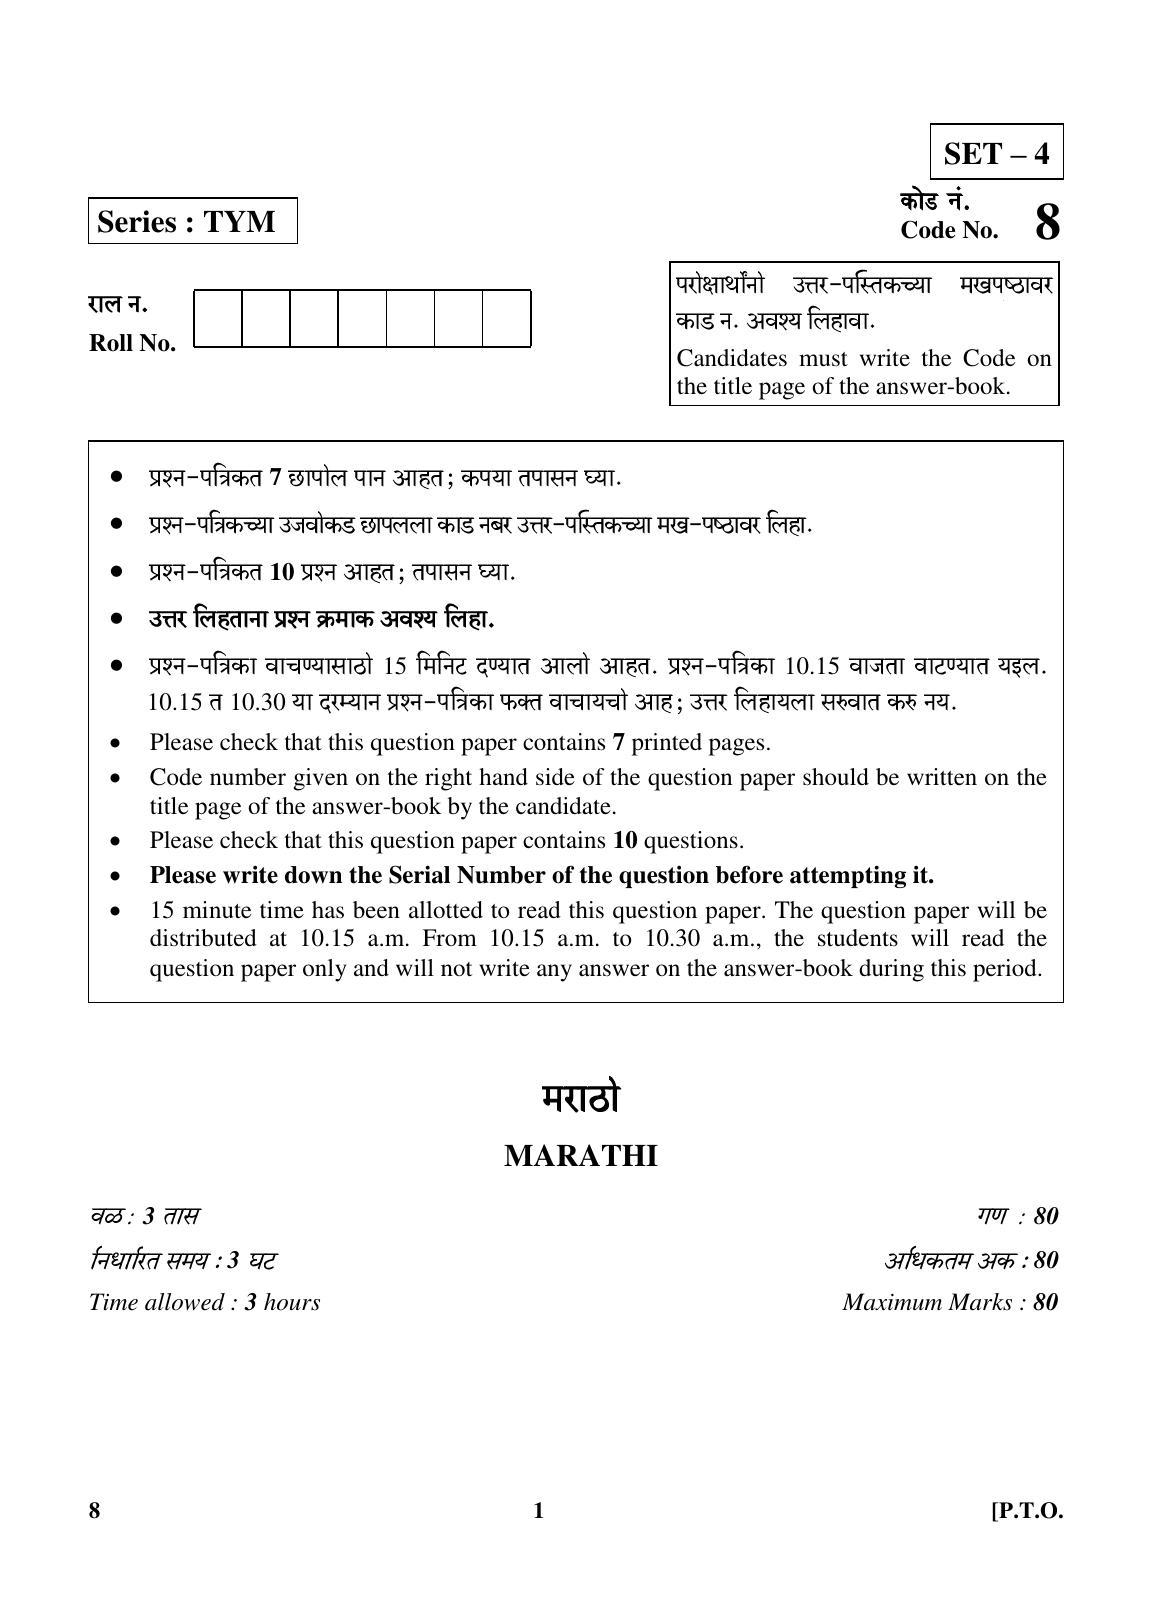 CBSE Class 10 8 (Marathi) 2018 Question Paper - Page 1